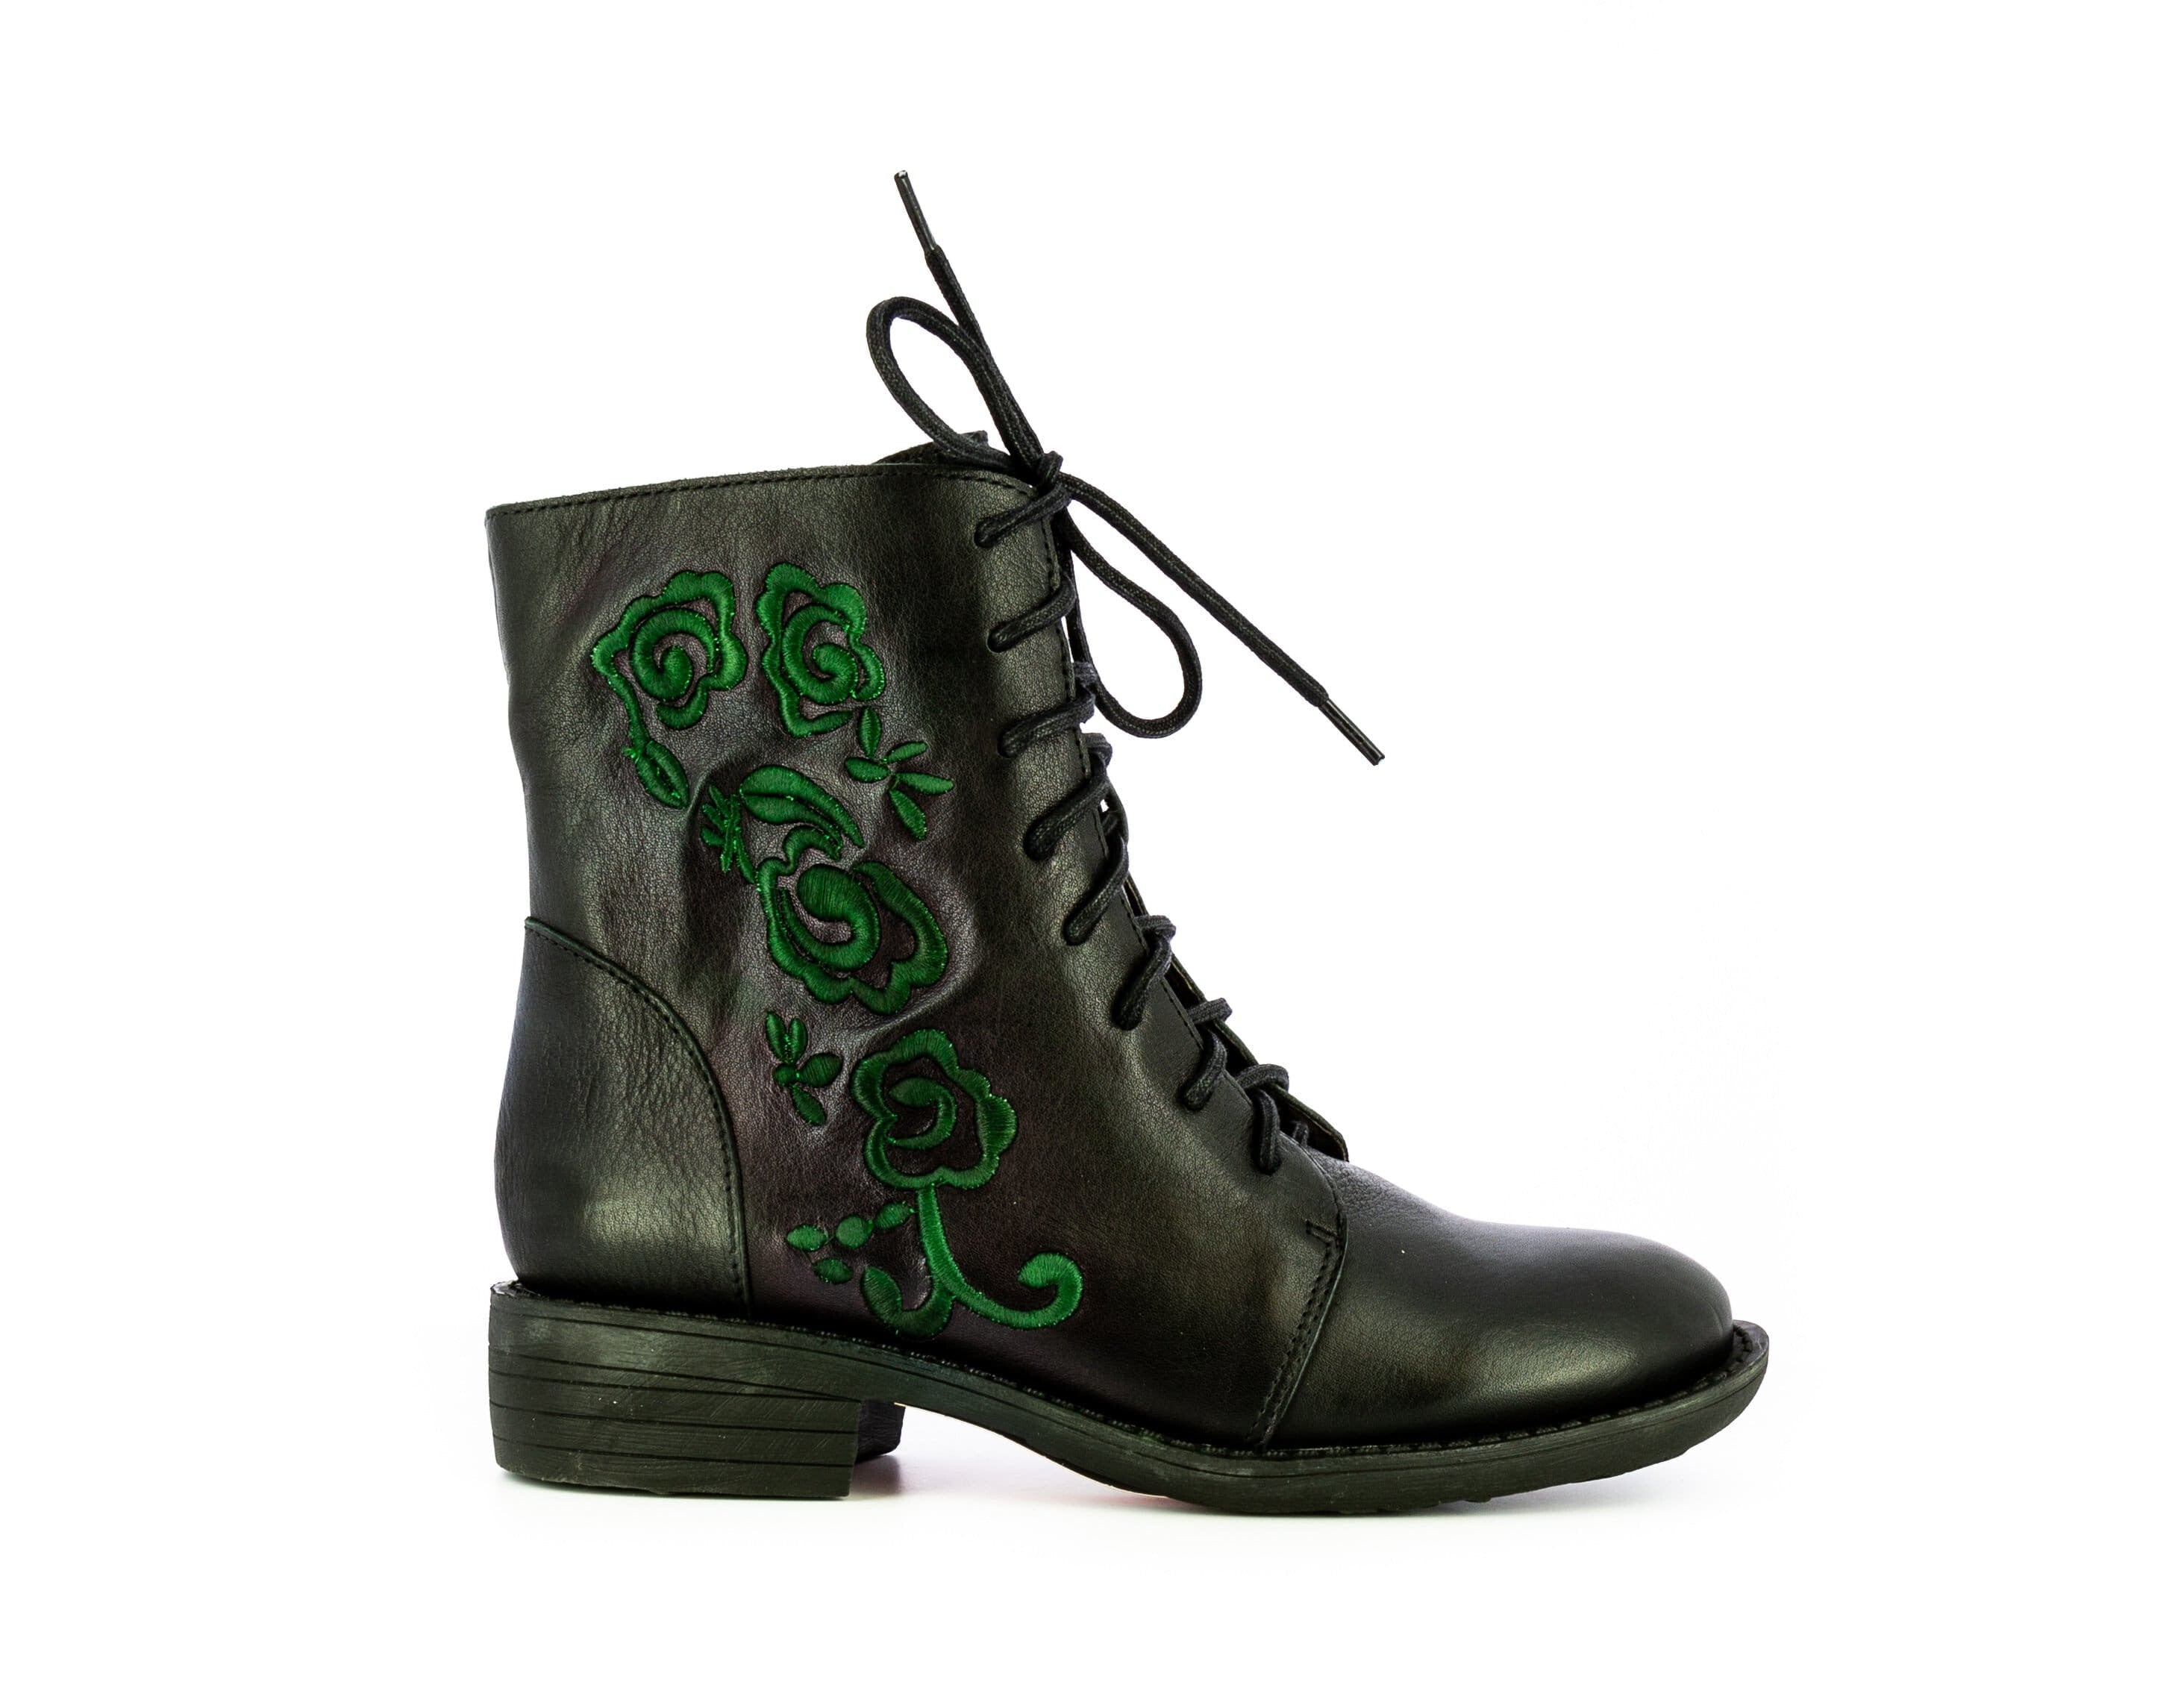 IDCALIAO 031 - 35 / Black - Boots